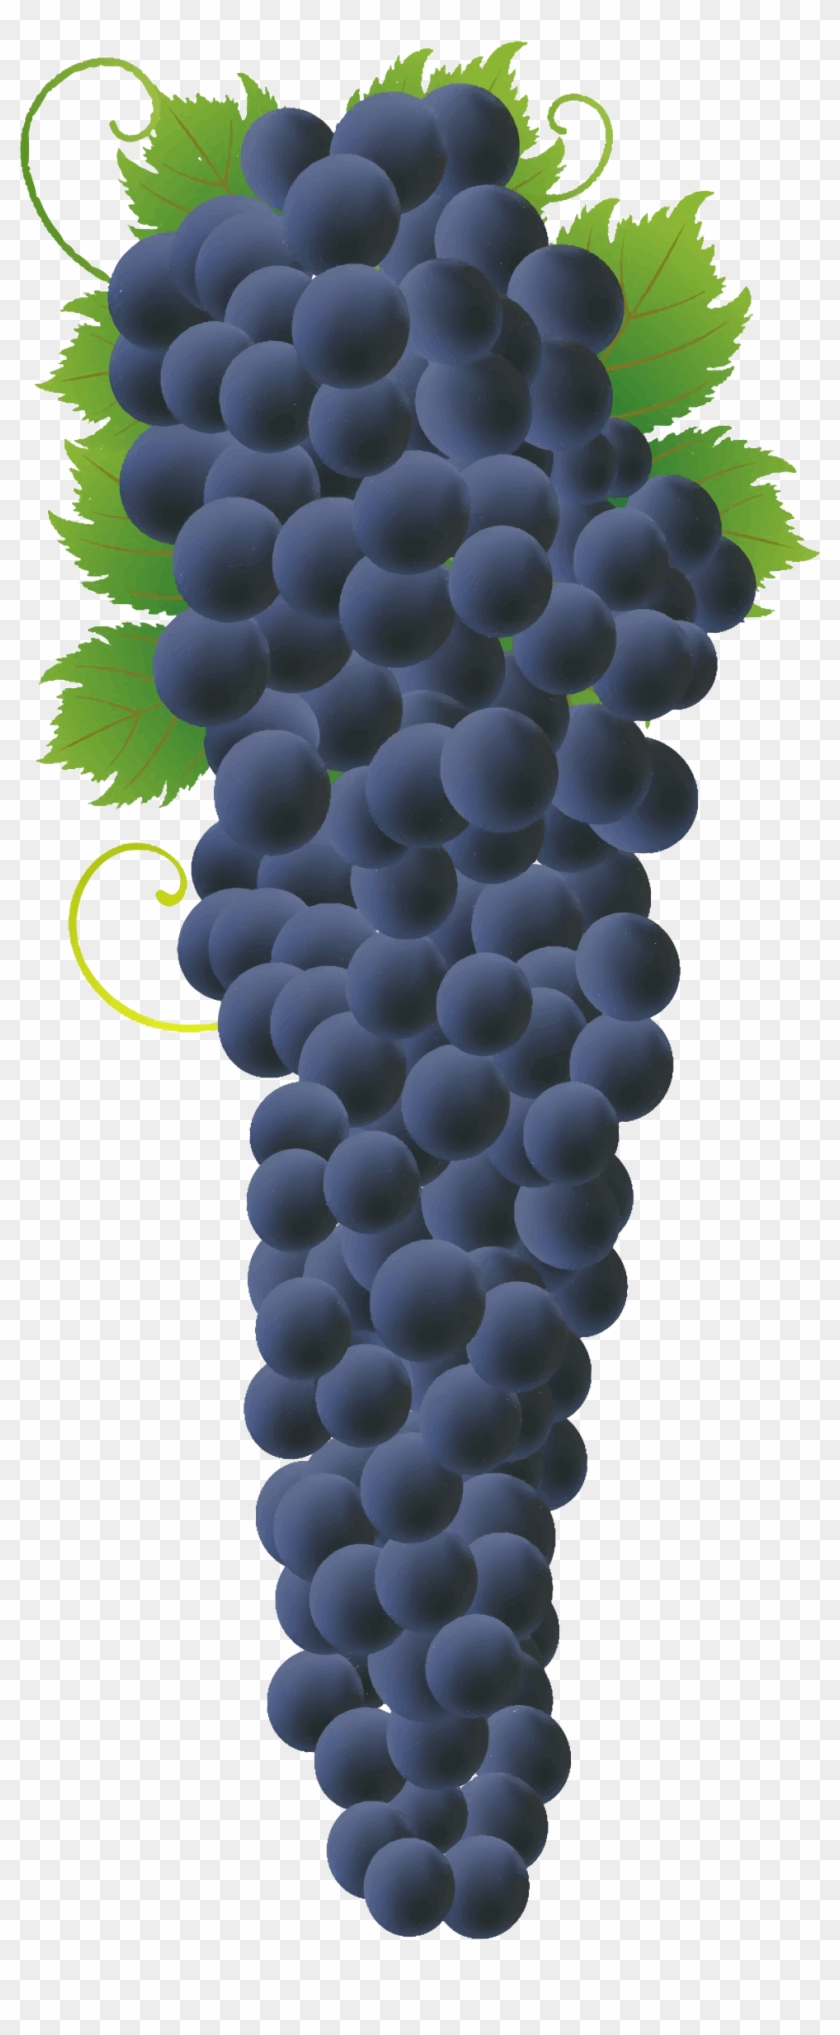 Big Image - Big Bunch Of Grapes #753516